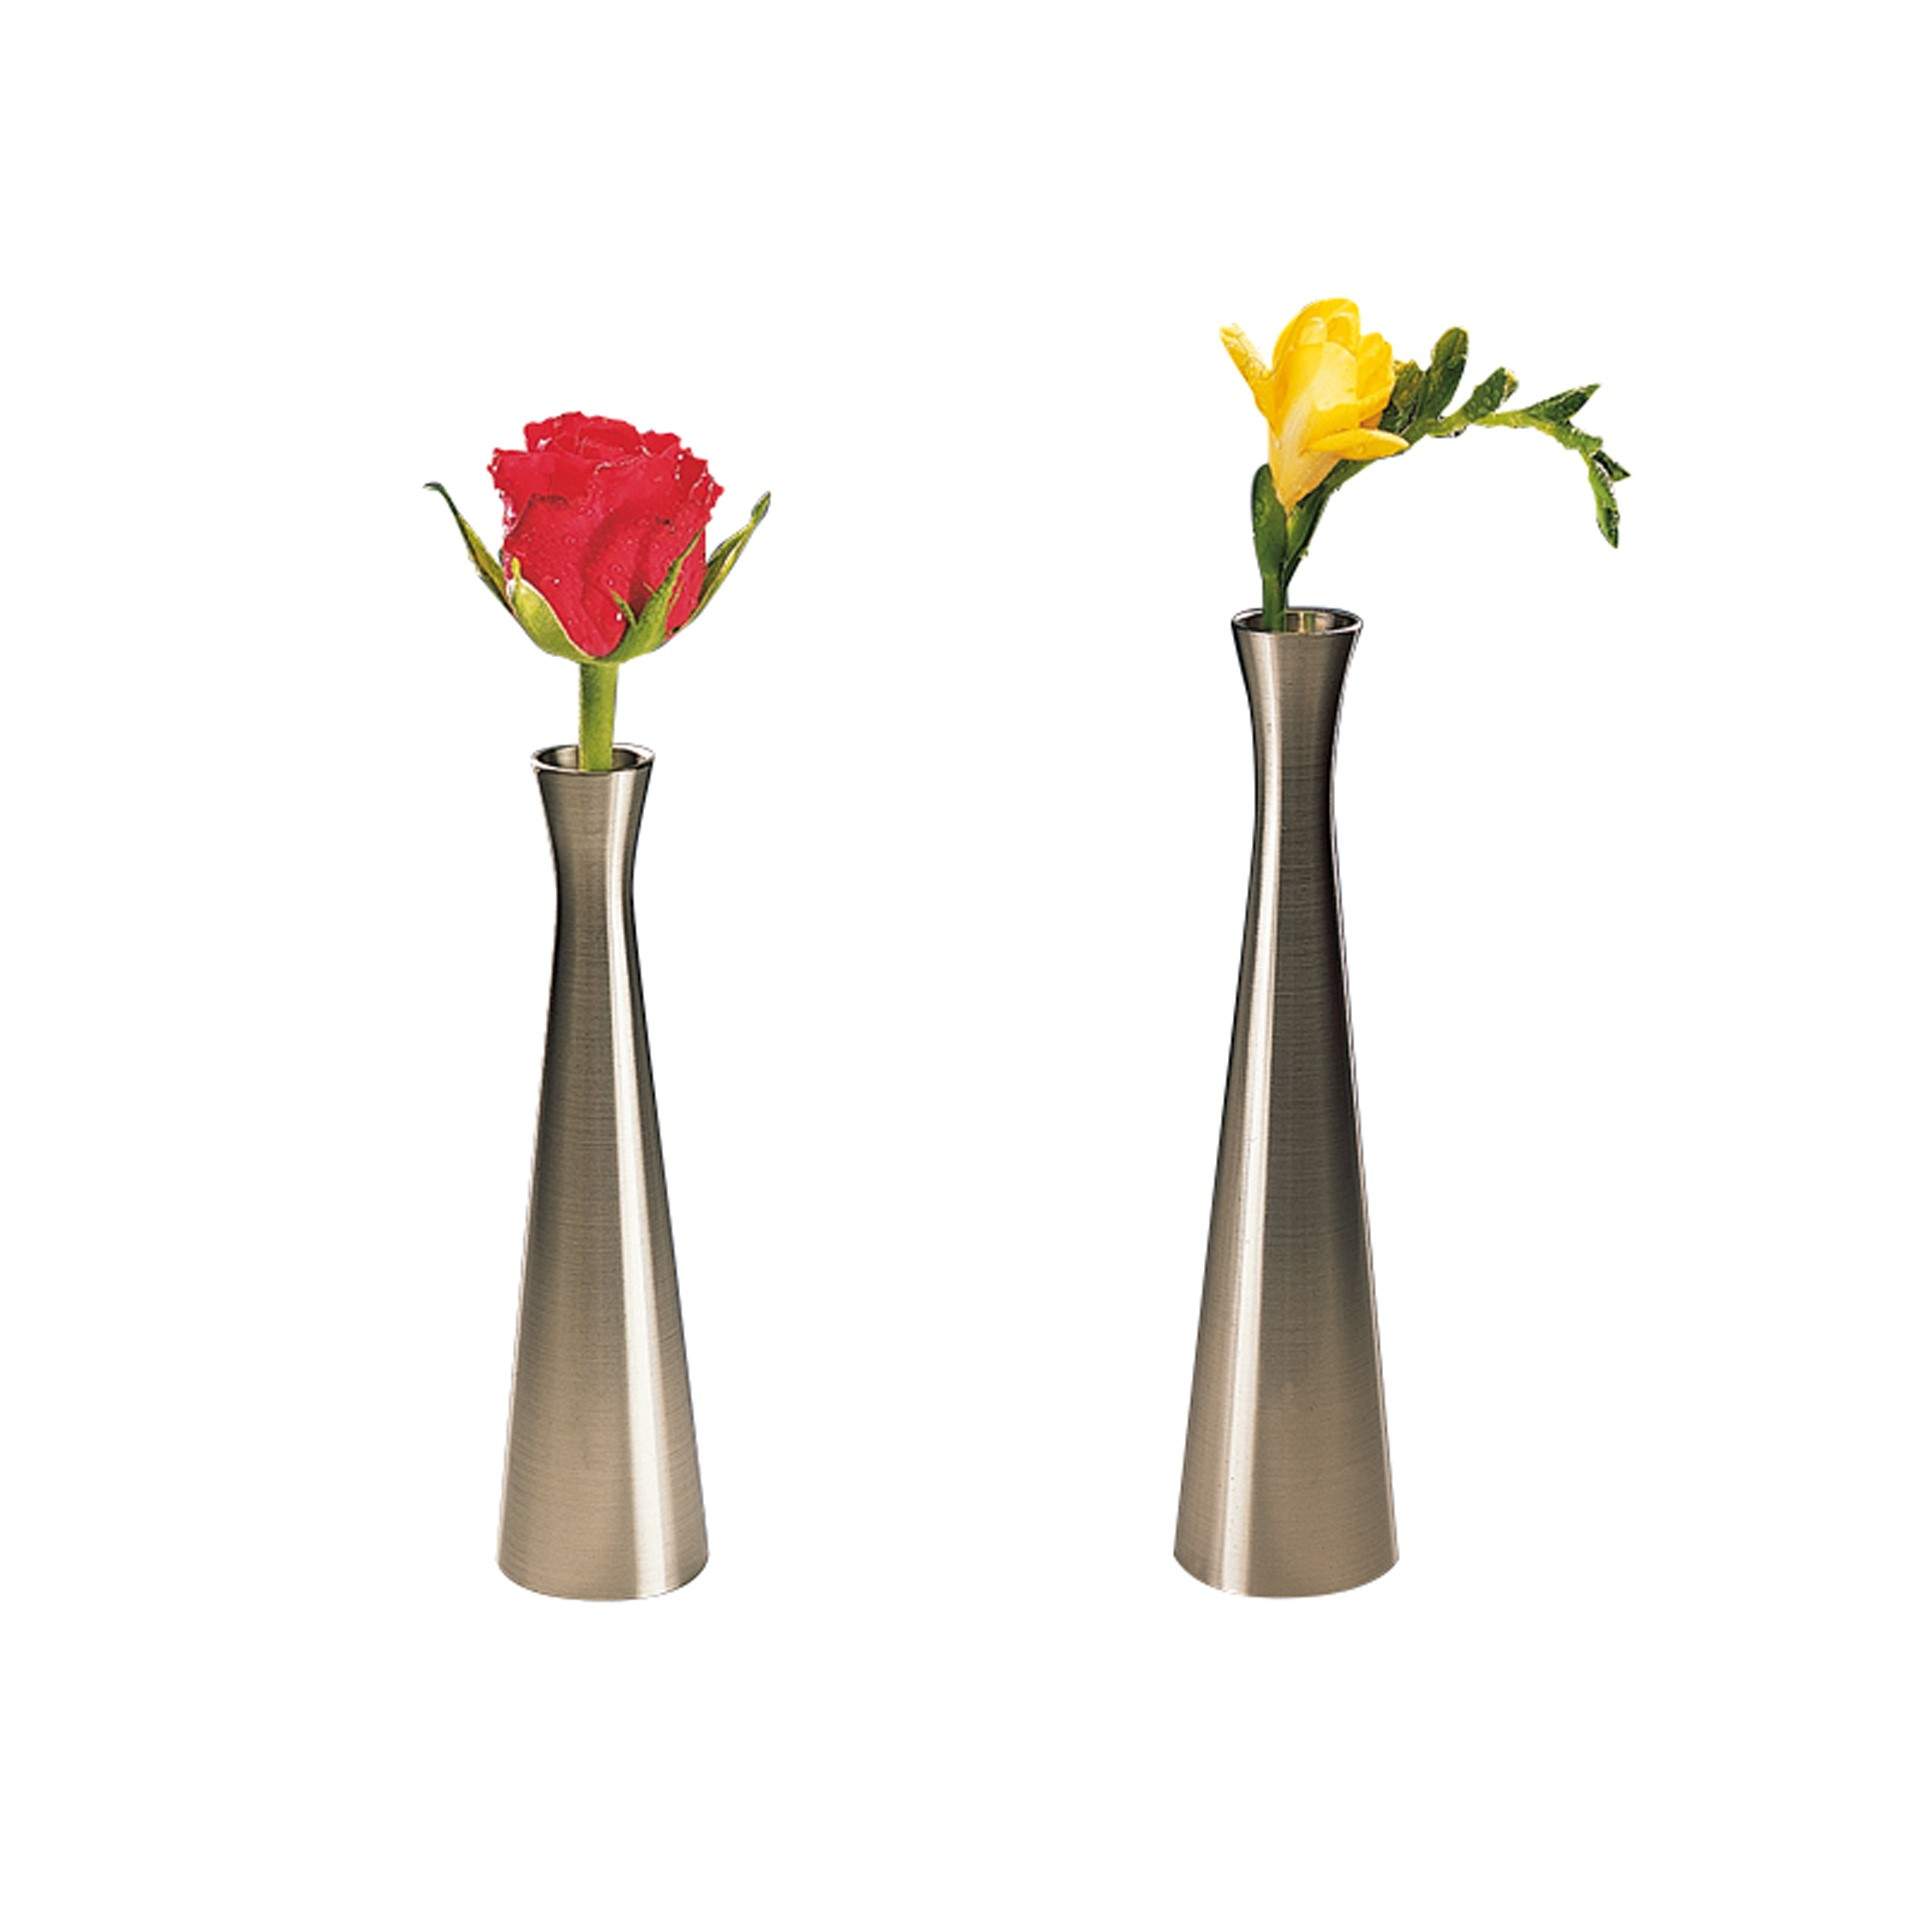 Vase - Edelstahl-Look - lackiert - rund - Abm. 16,5 cm - Ø 4,0 cm - Zinkdruckguss - 4015-B